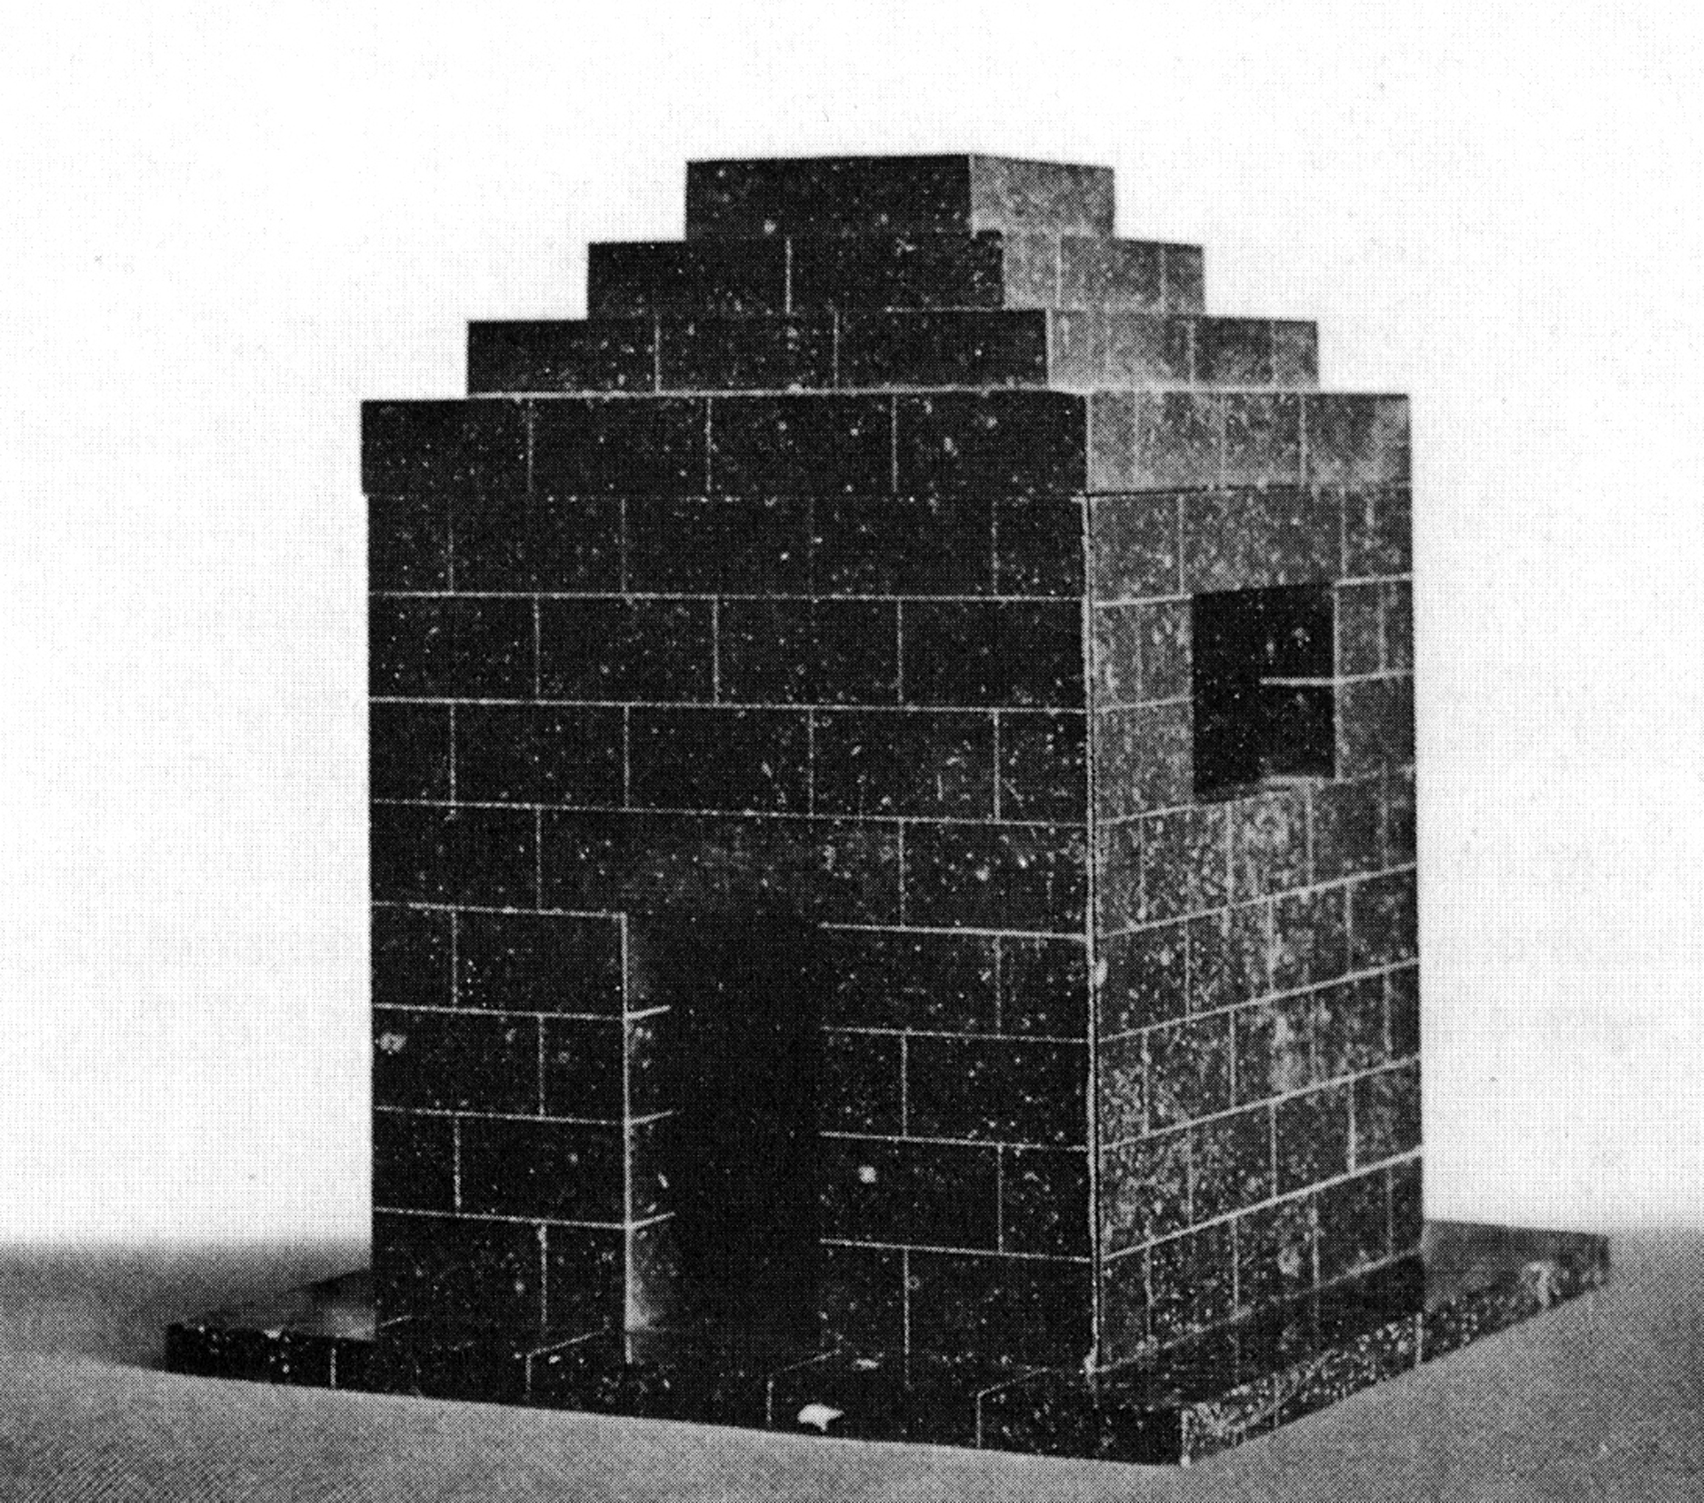 a-very-small-Part-of-architecture-model-adolf-loos-mausoleum-for-max-dvorak_dezeen_1704_col_0